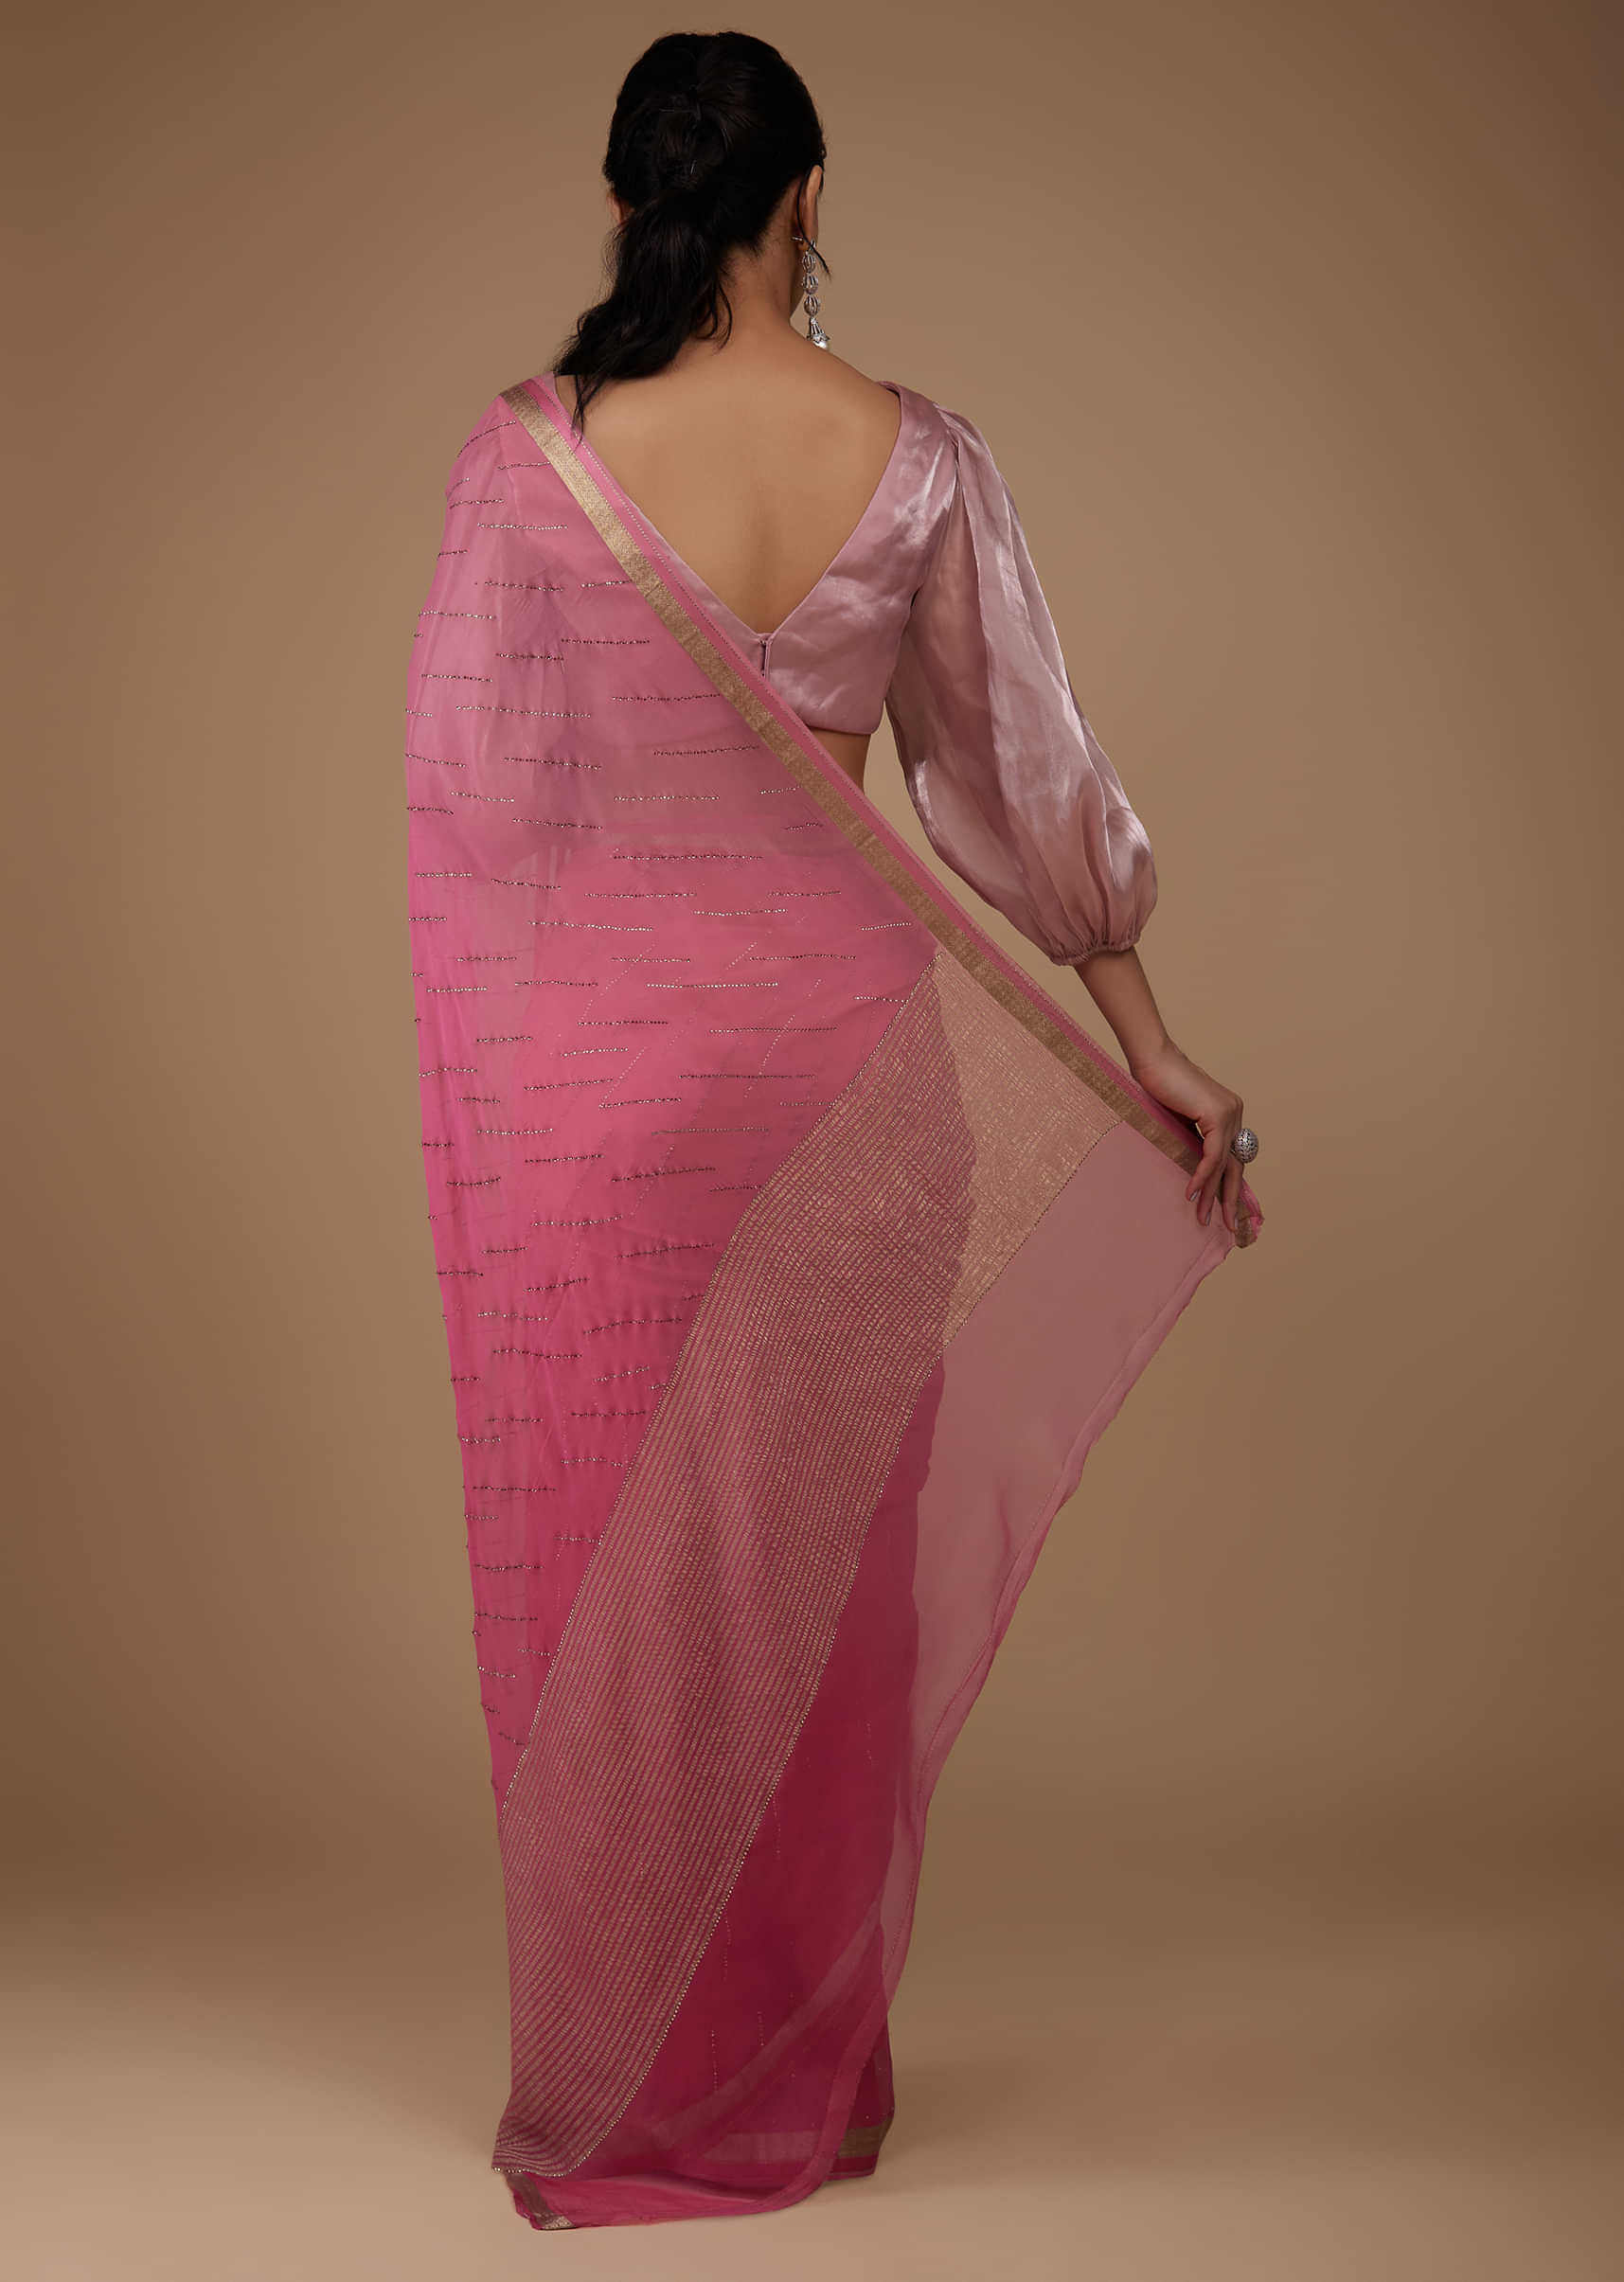 Rouge Pink Chiffon Saree With Swarovski Stone Embellishments And Zari Border